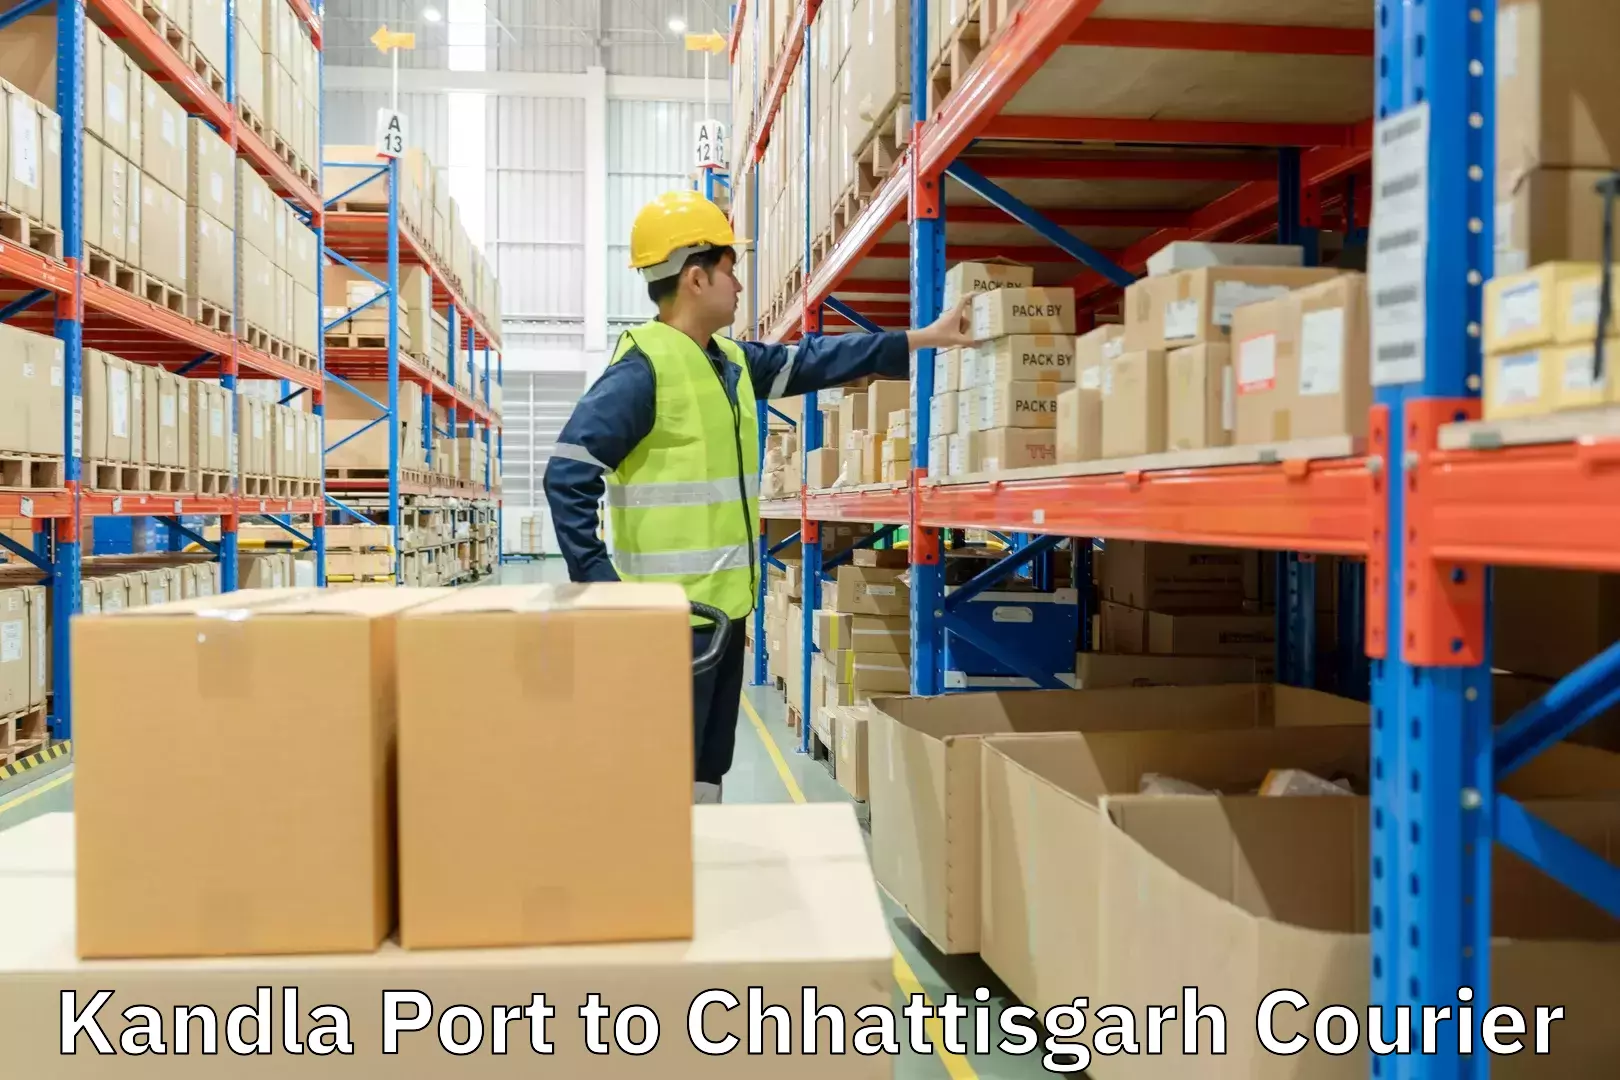 Customer-focused courier Kandla Port to Chhattisgarh